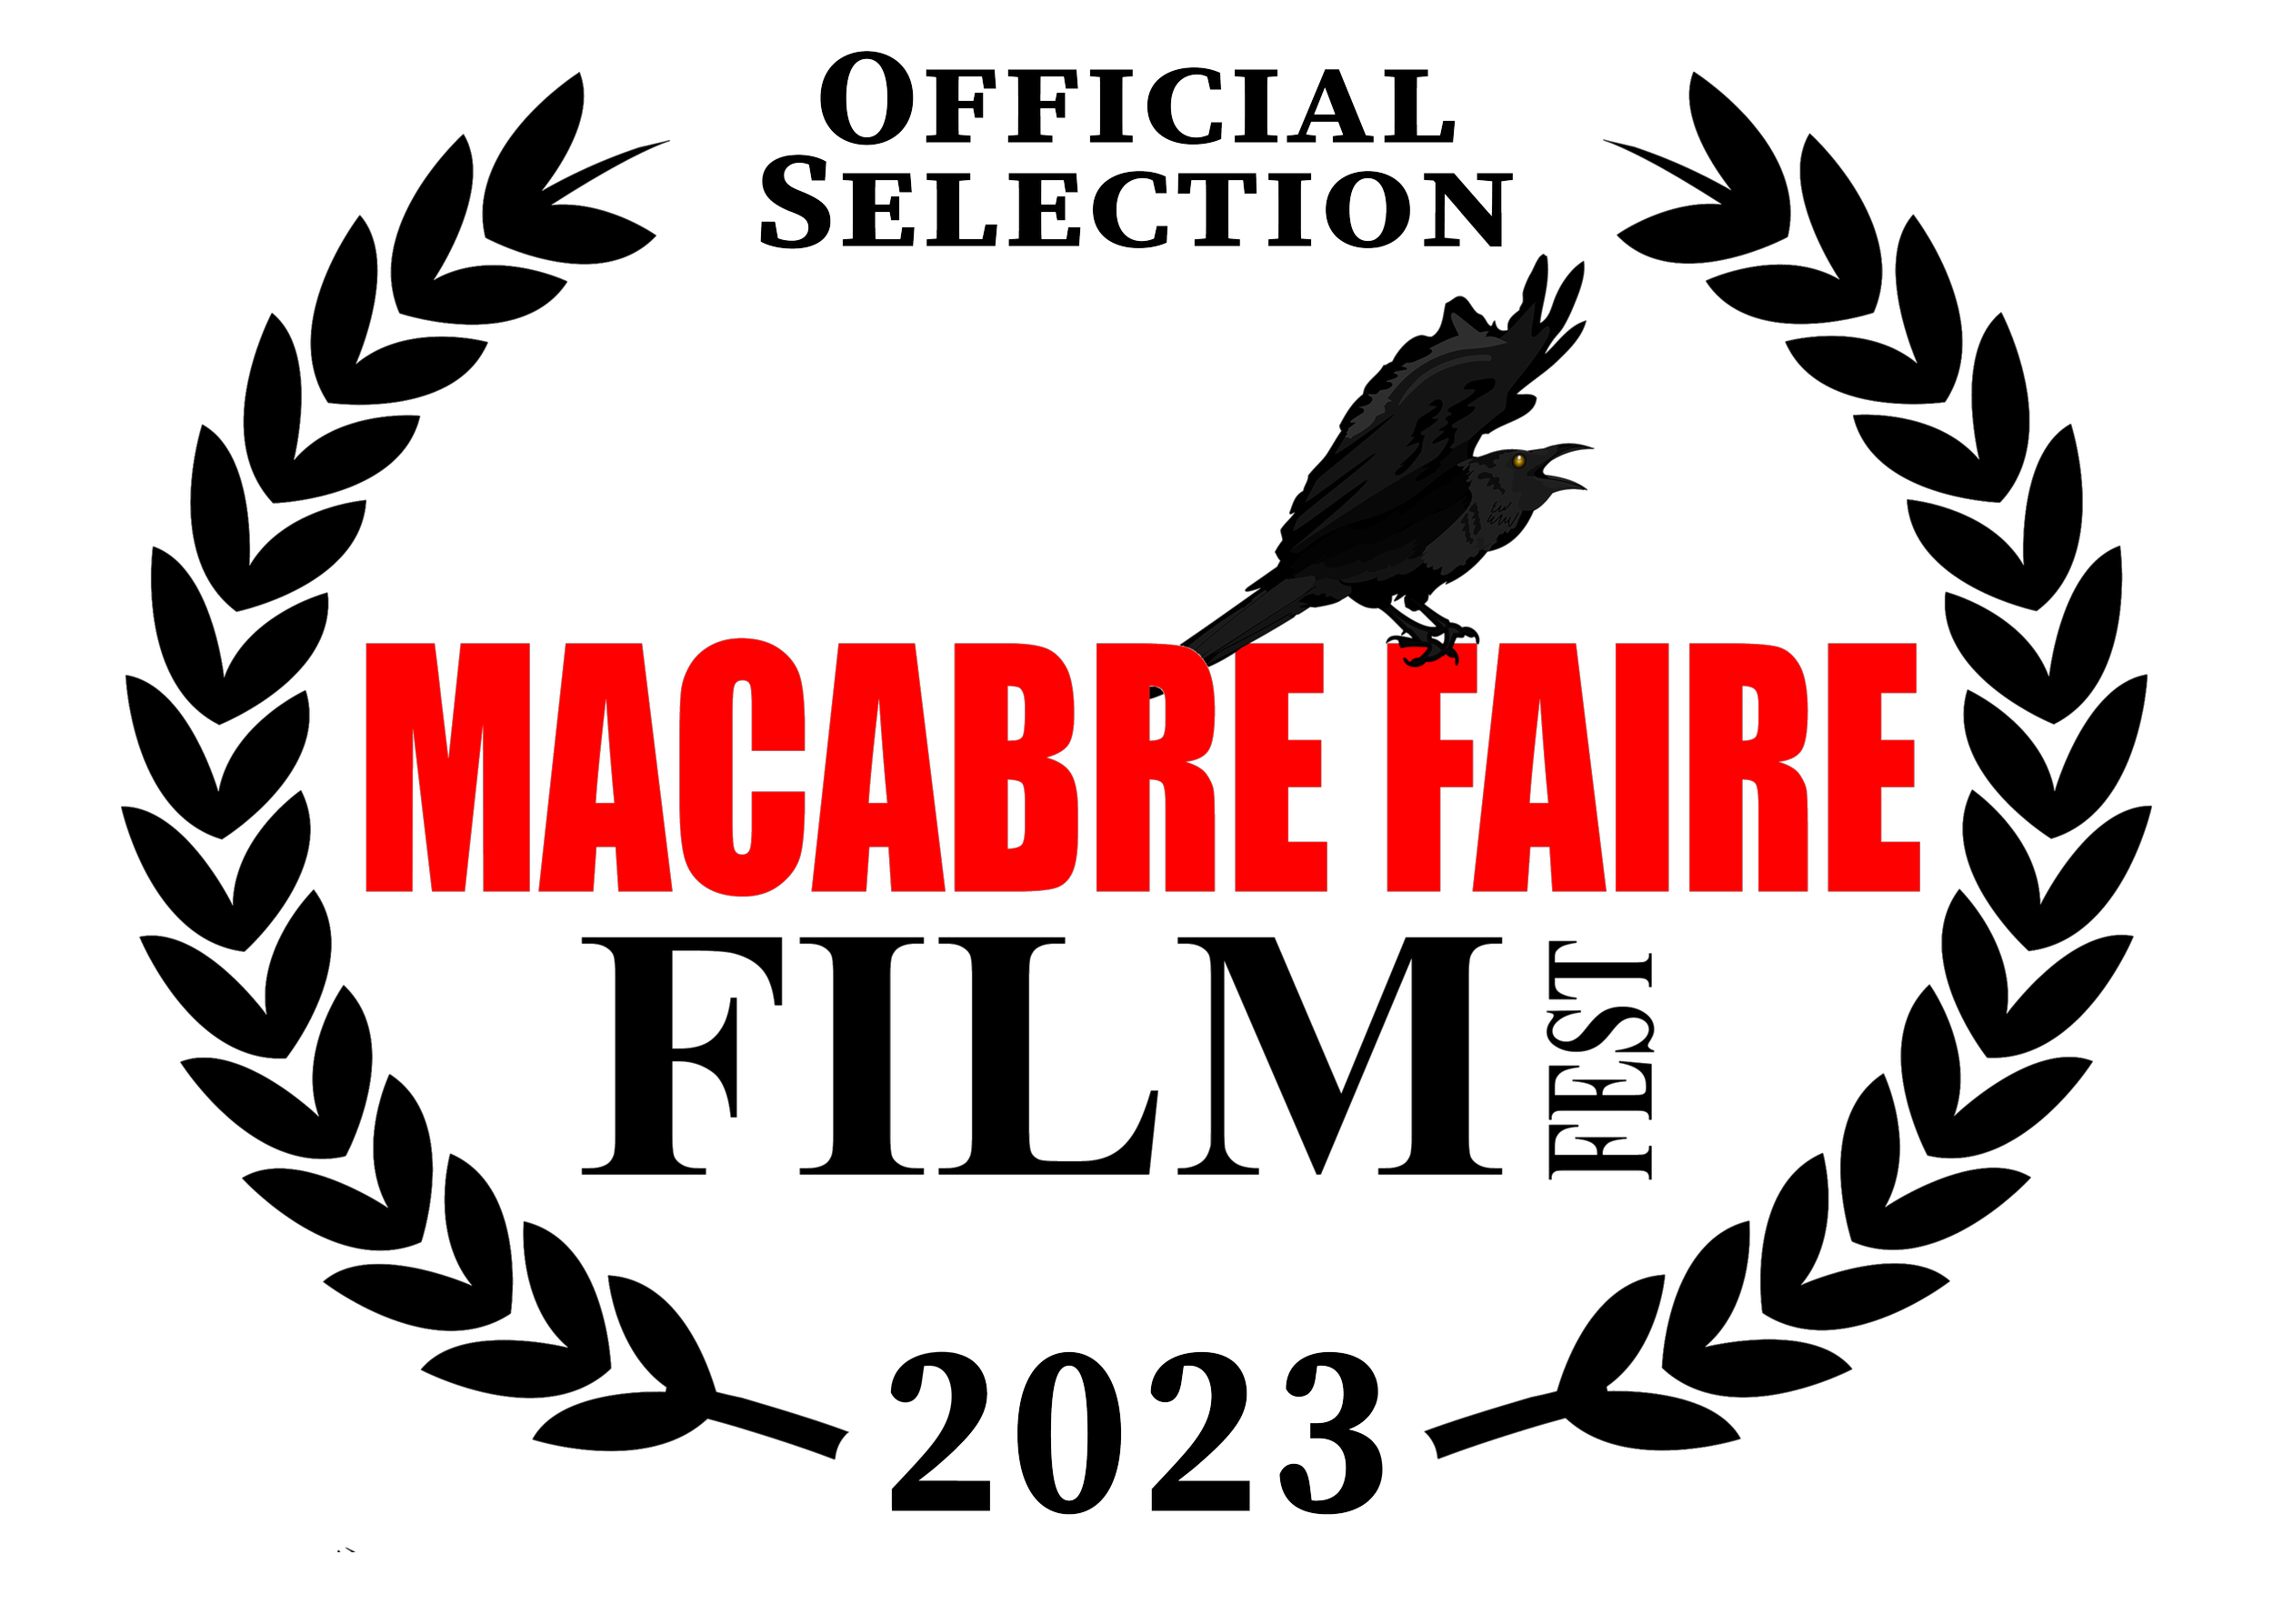 Macabre Faire Film Festival Official Selection 2023.png